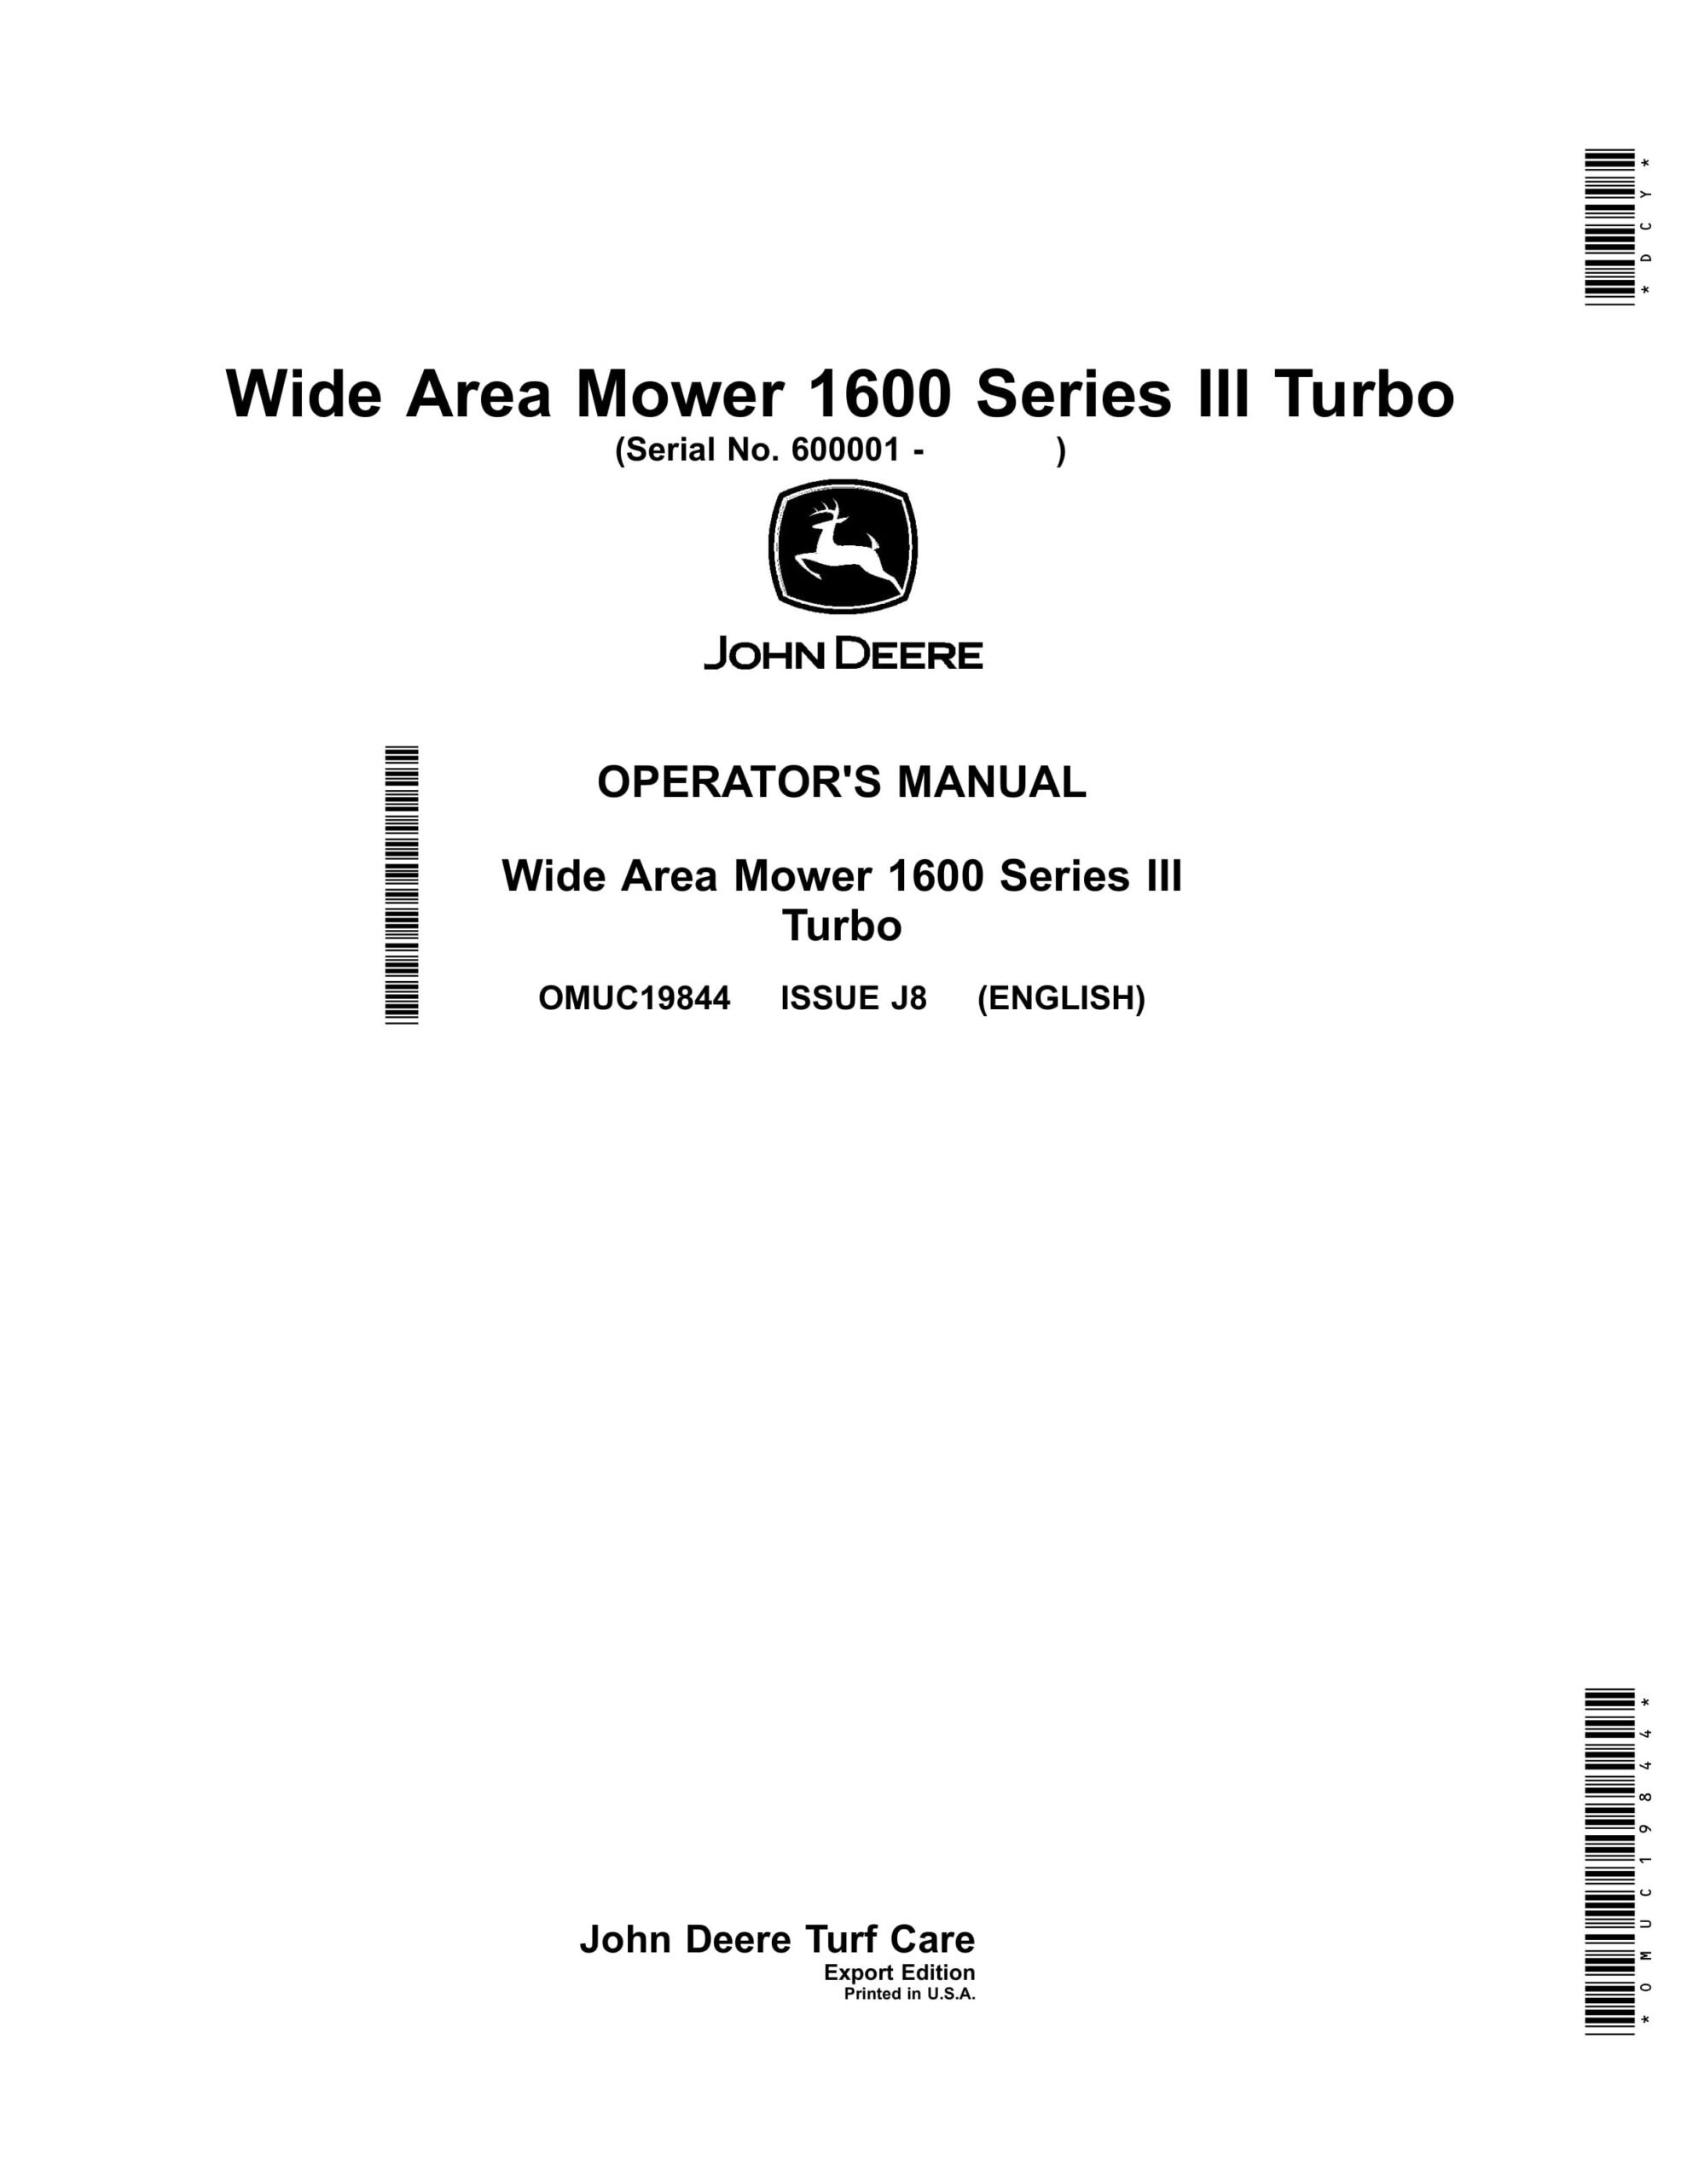 John Deere 1600 Series III Turbo Wide Area Mower Operator Manual OMUC19844-1